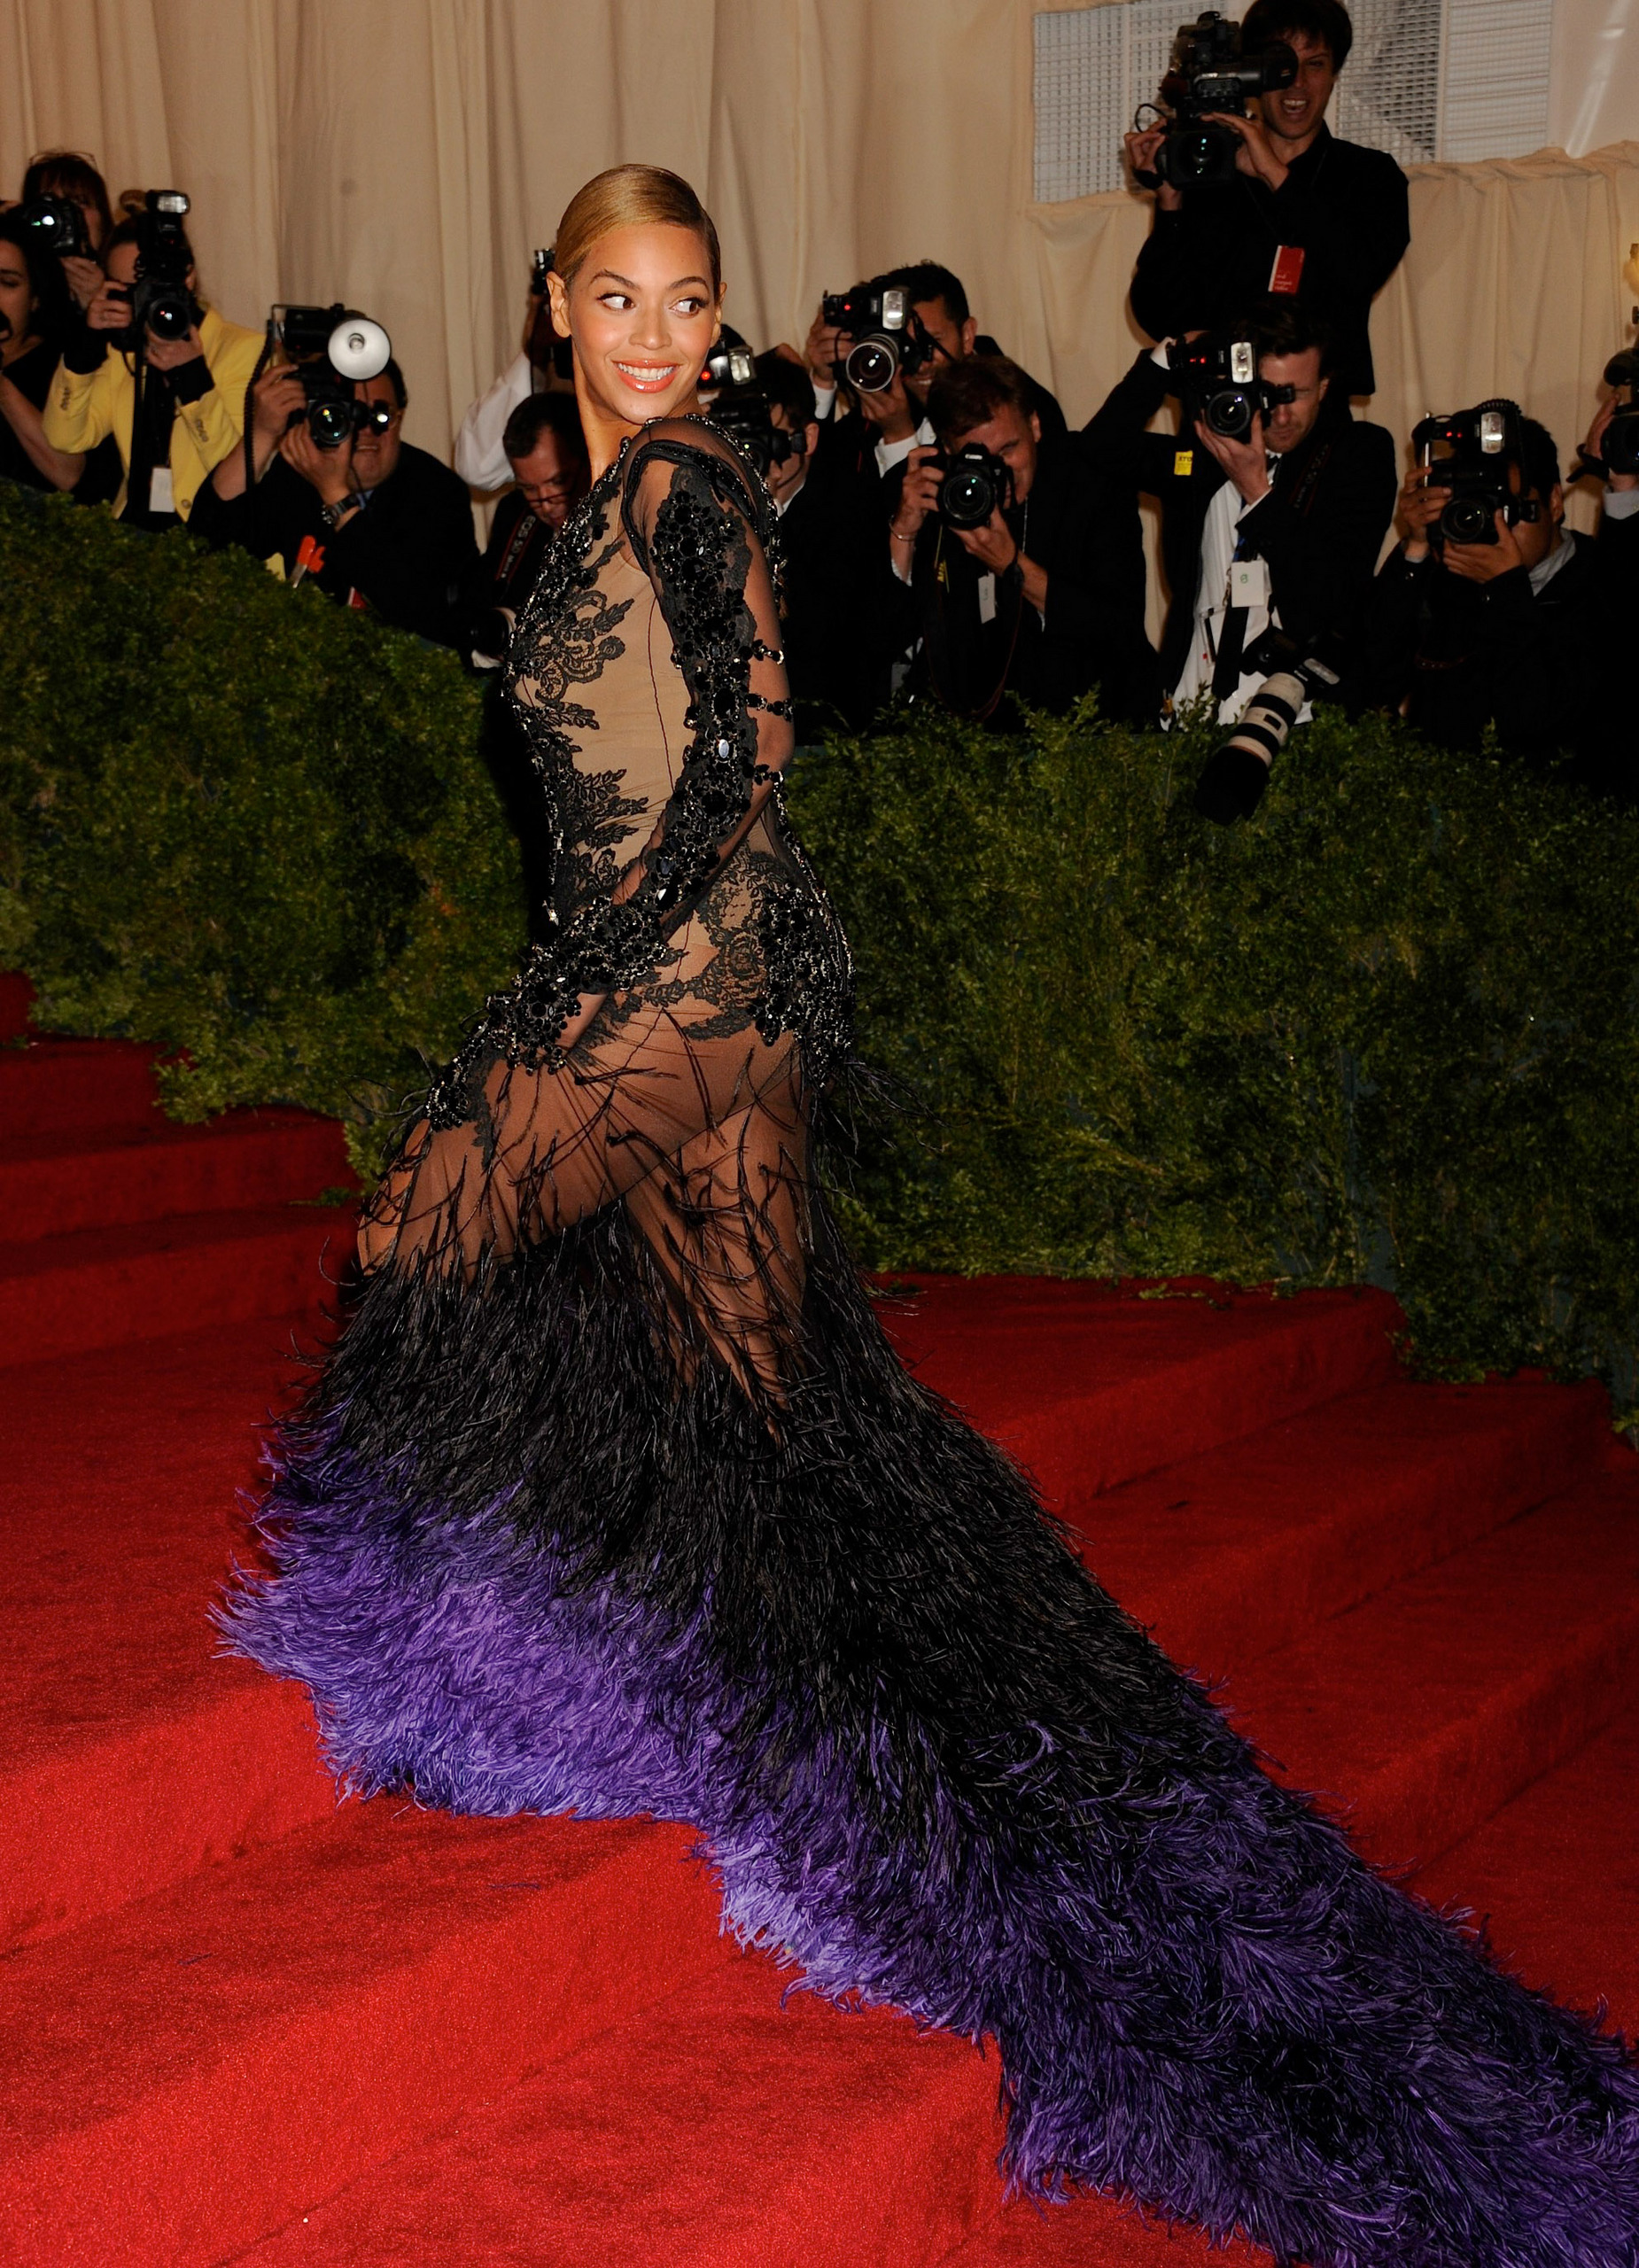 Metropolitan Museum Of Art Costume Institute Gala In New York City [7 May 2012] Beyonce Photo